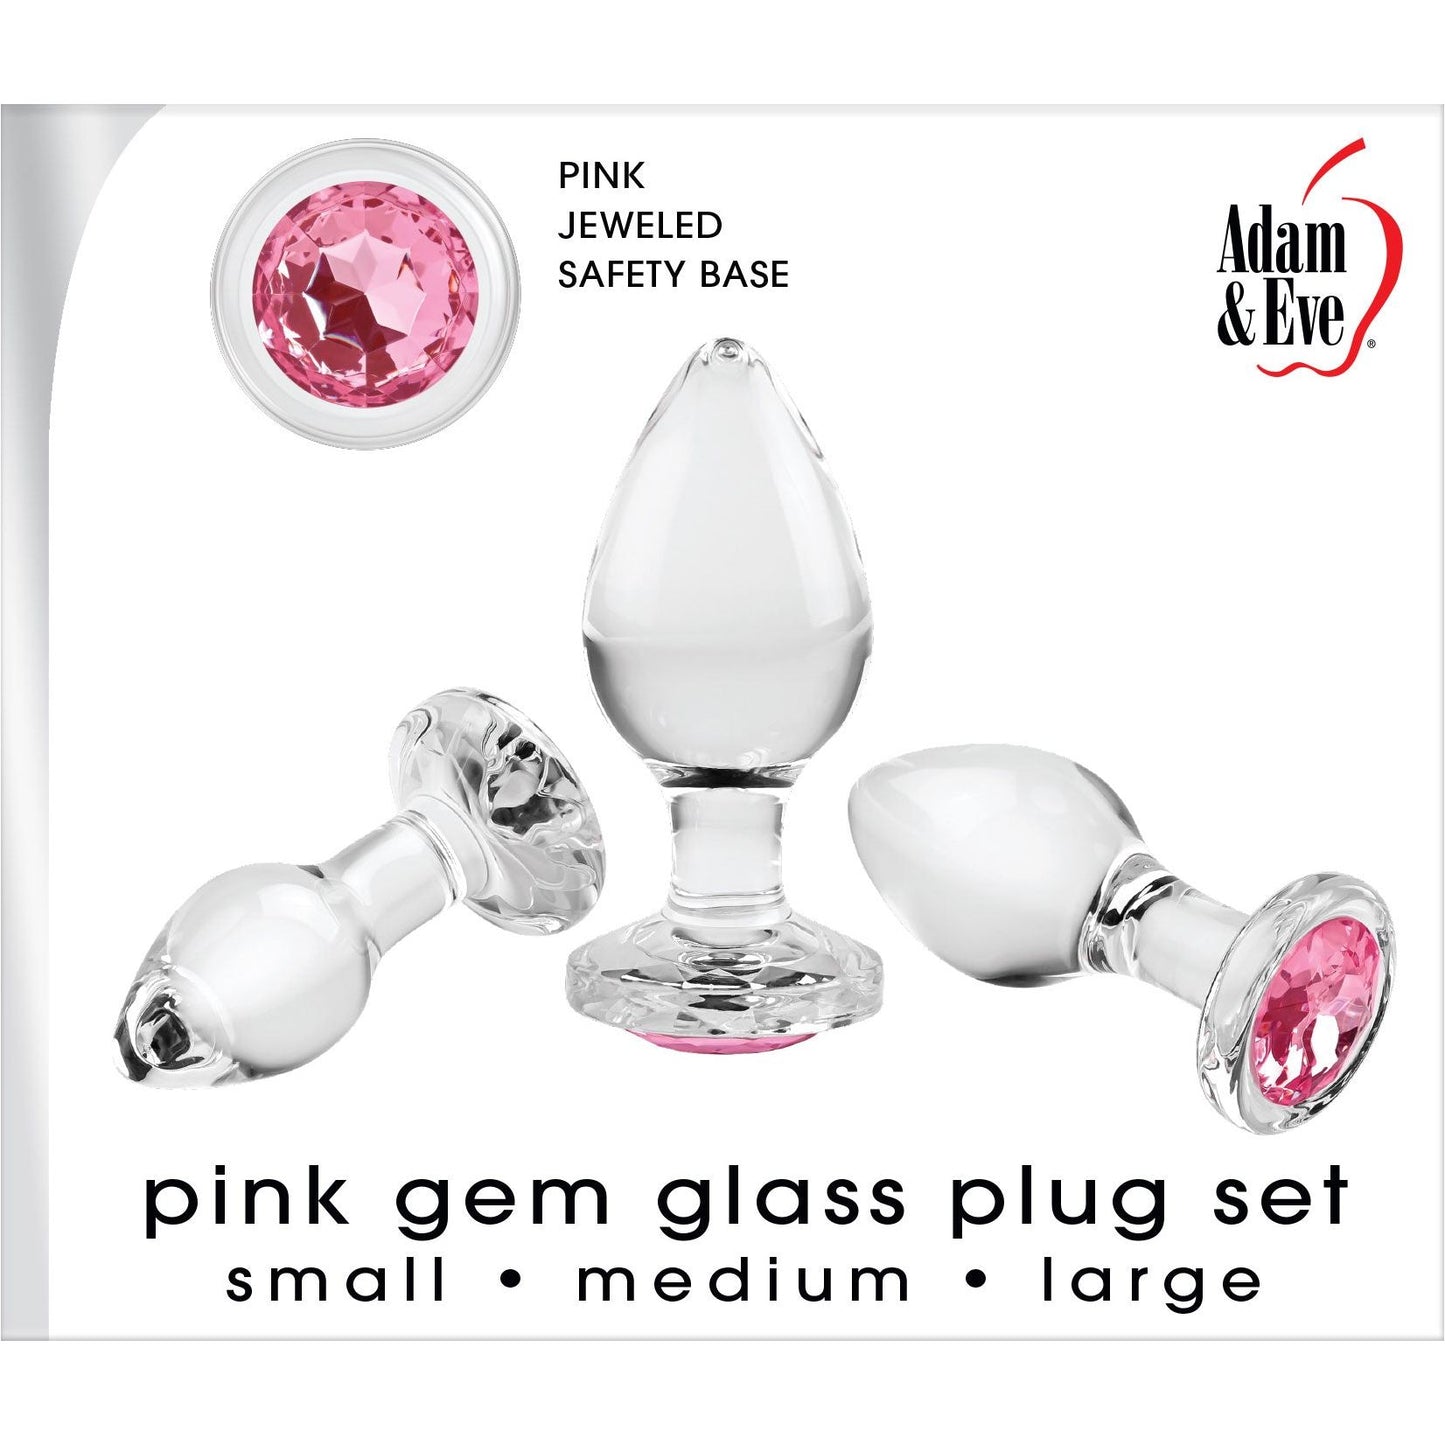 Pink Gem Glass Plug Set - Pink